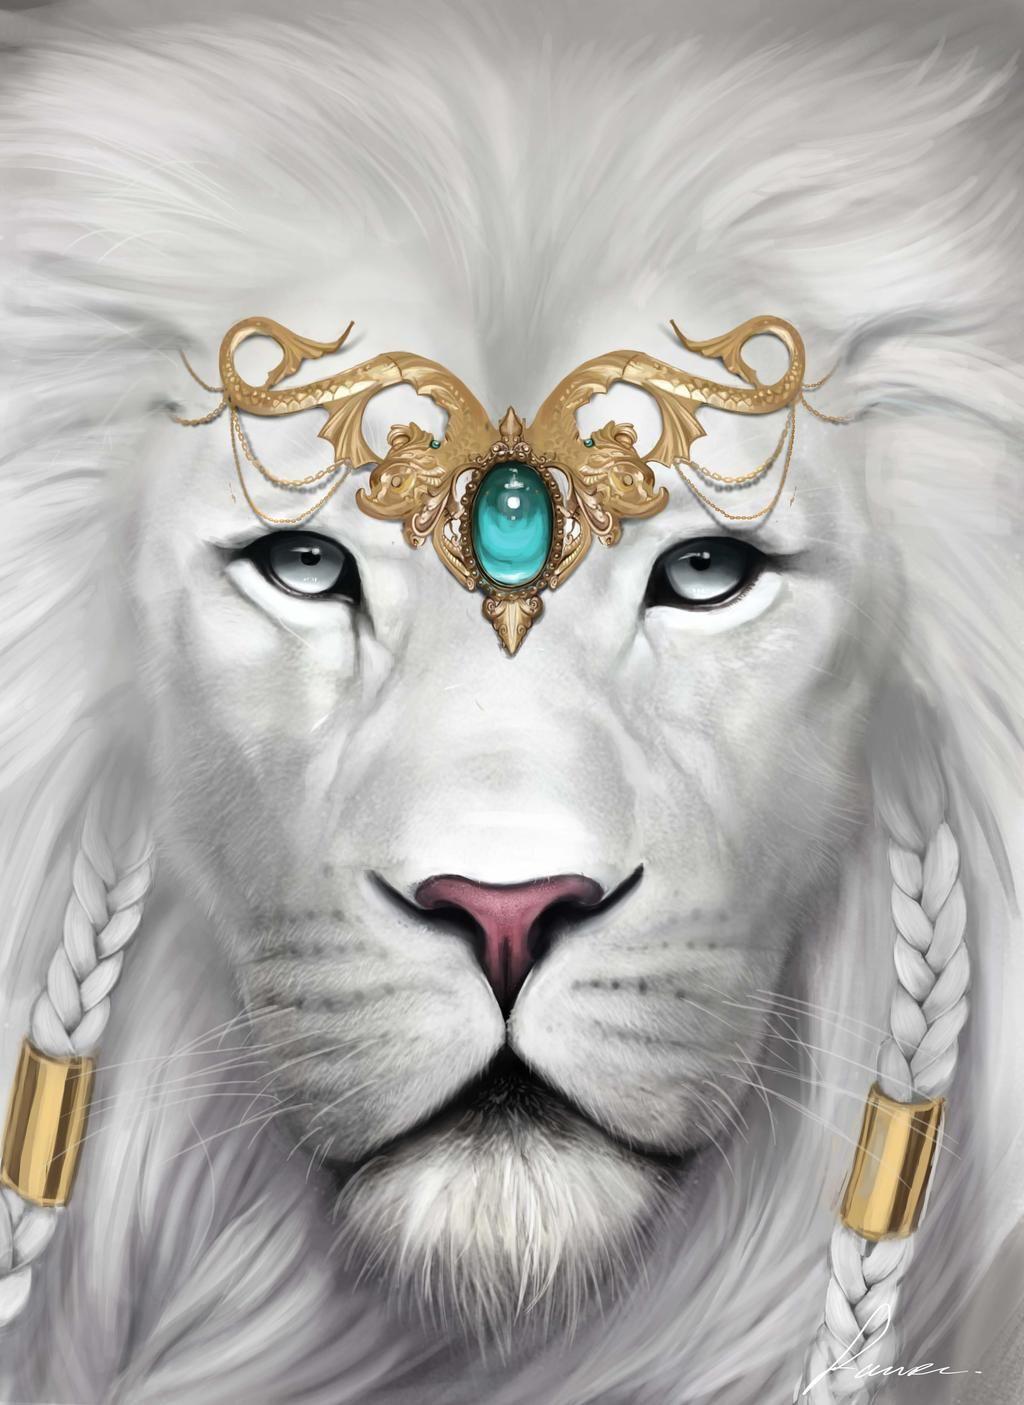 200 Free White Lion  Lion Images  Pixabay